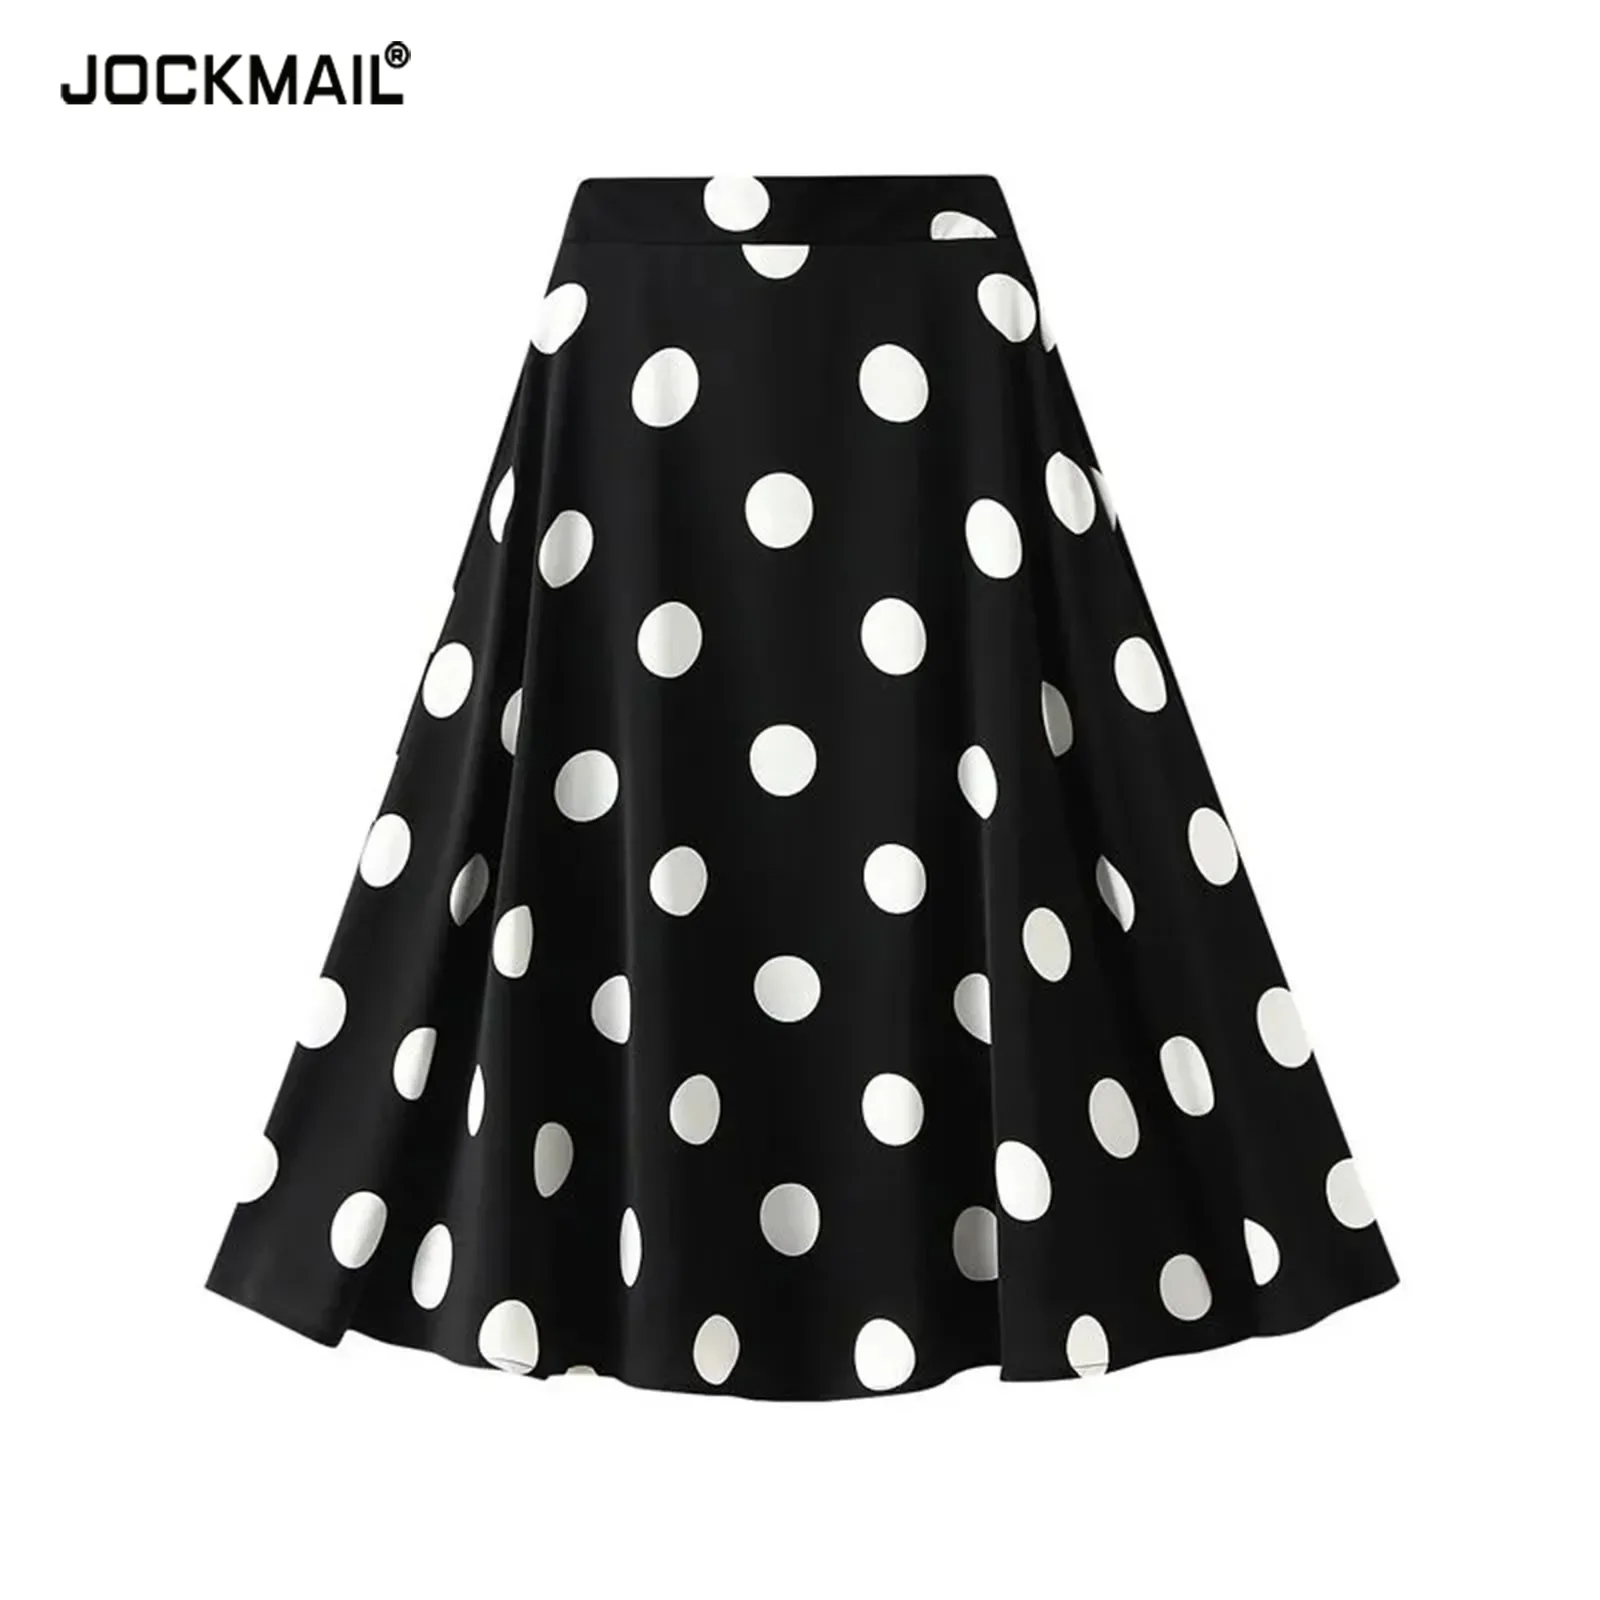 

Women's Short Skirts Polka Dot Skirt Dotted 70s Vintage Harajuku Casual Skirts Womens Retro Mini Skirt Skort Clothes Present